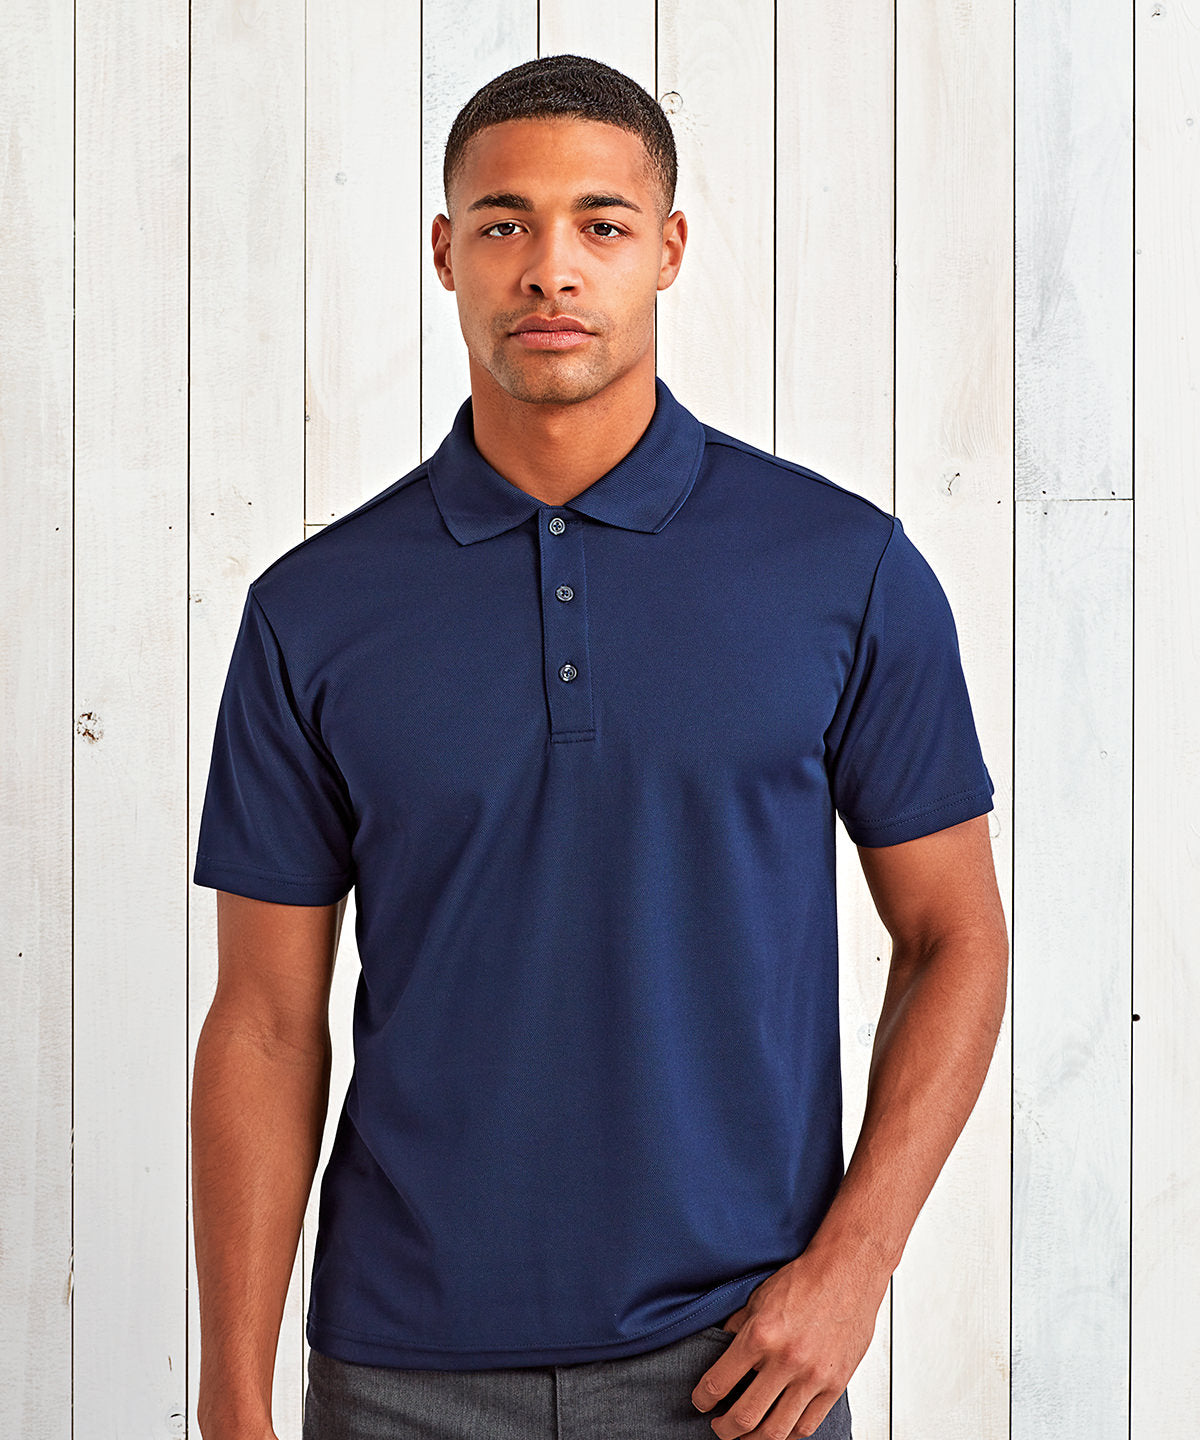 Men's spun dyed sustainable polo shirt